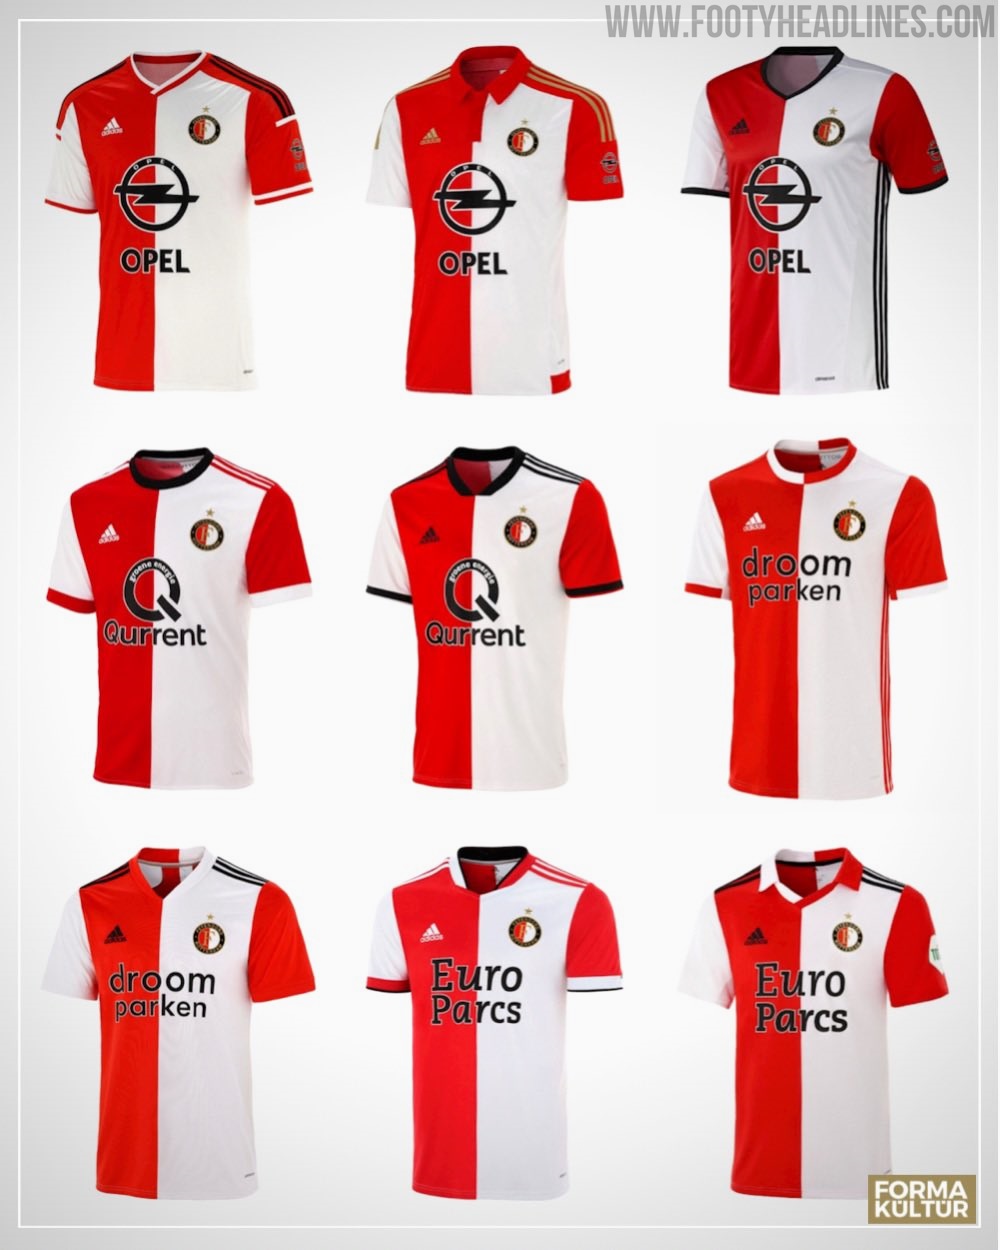 Feyenoord Home Kit - Most Consistent Football Shirt Europe? - Footy Headlines